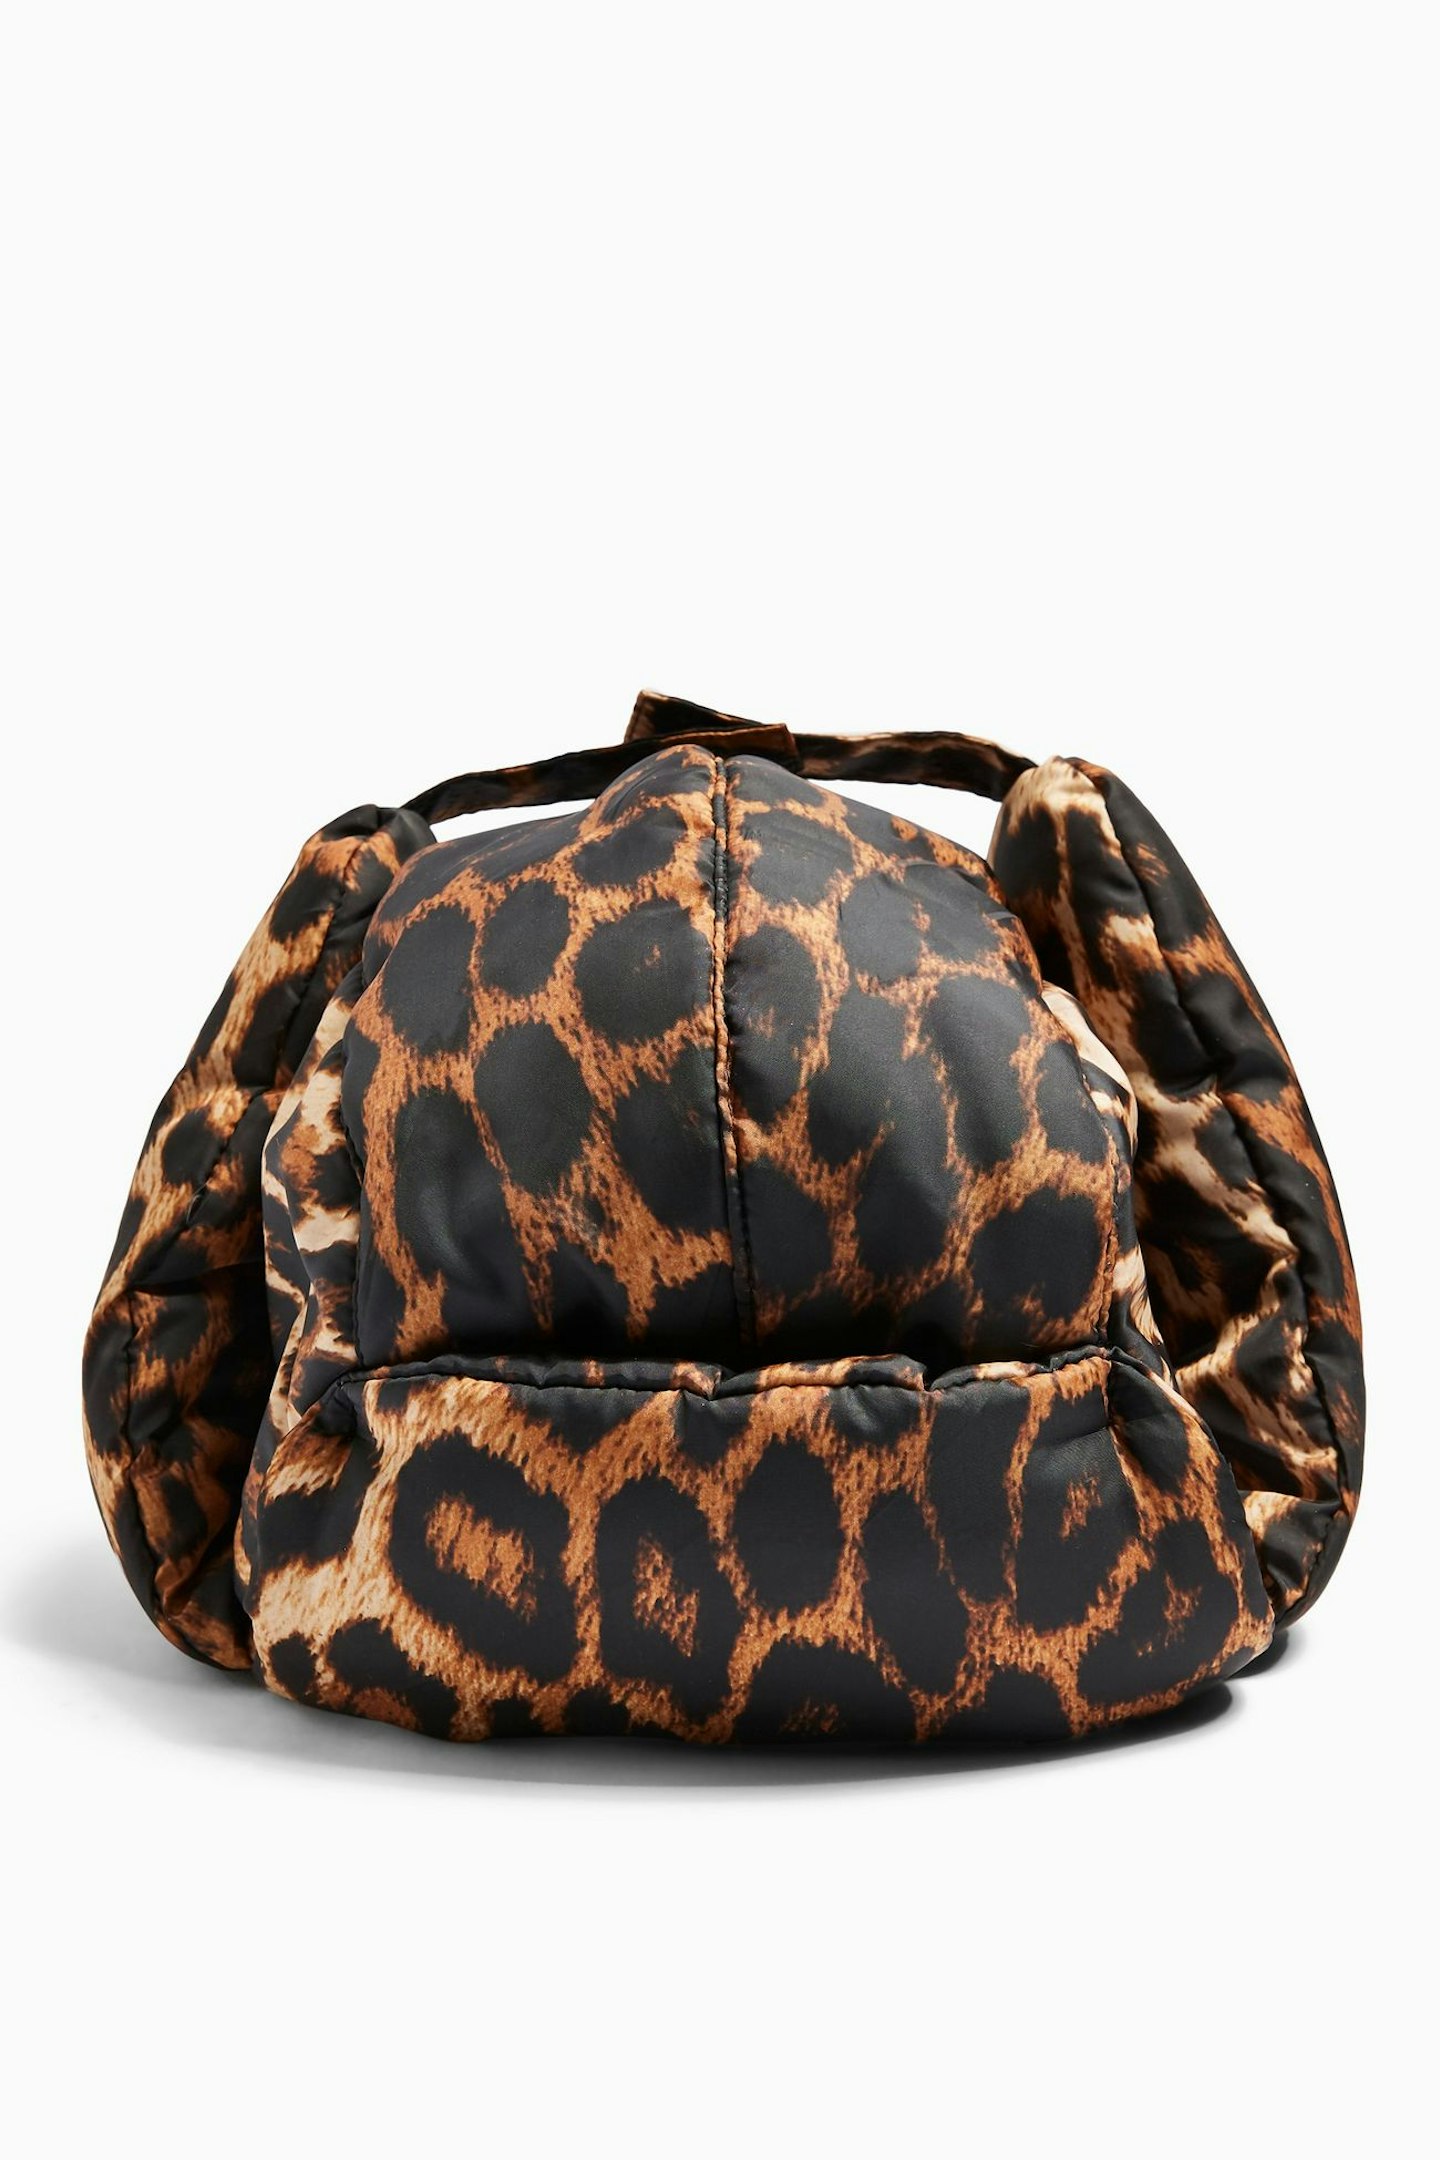 Topshop, Leopard print trapper hat, £18